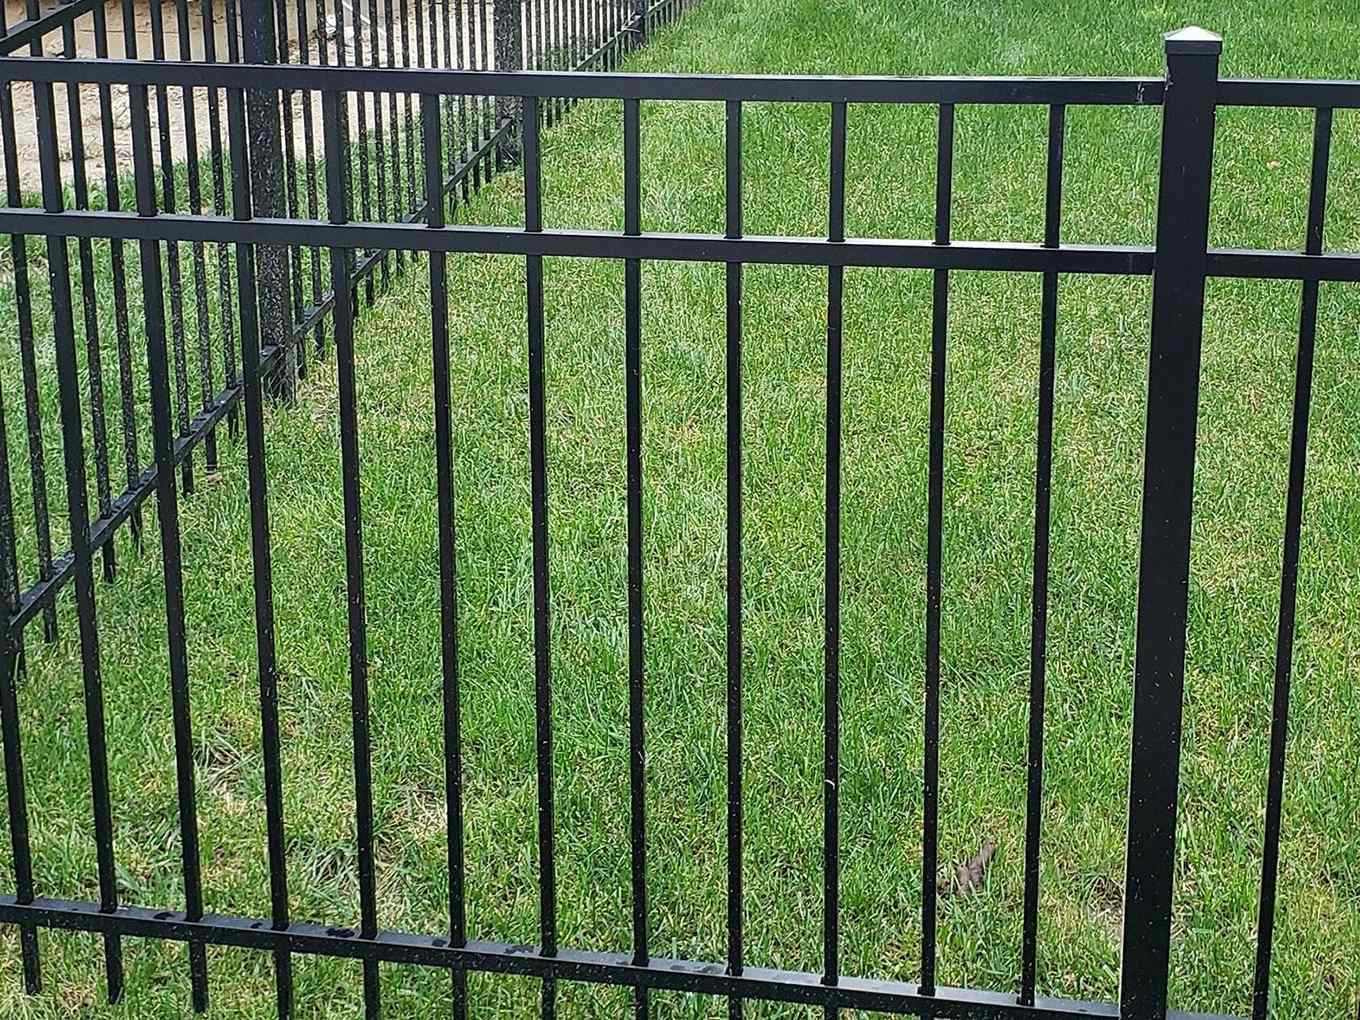 Aluminum Fence by Good Shepherd Fence - an Indianapolis Indiana fence company